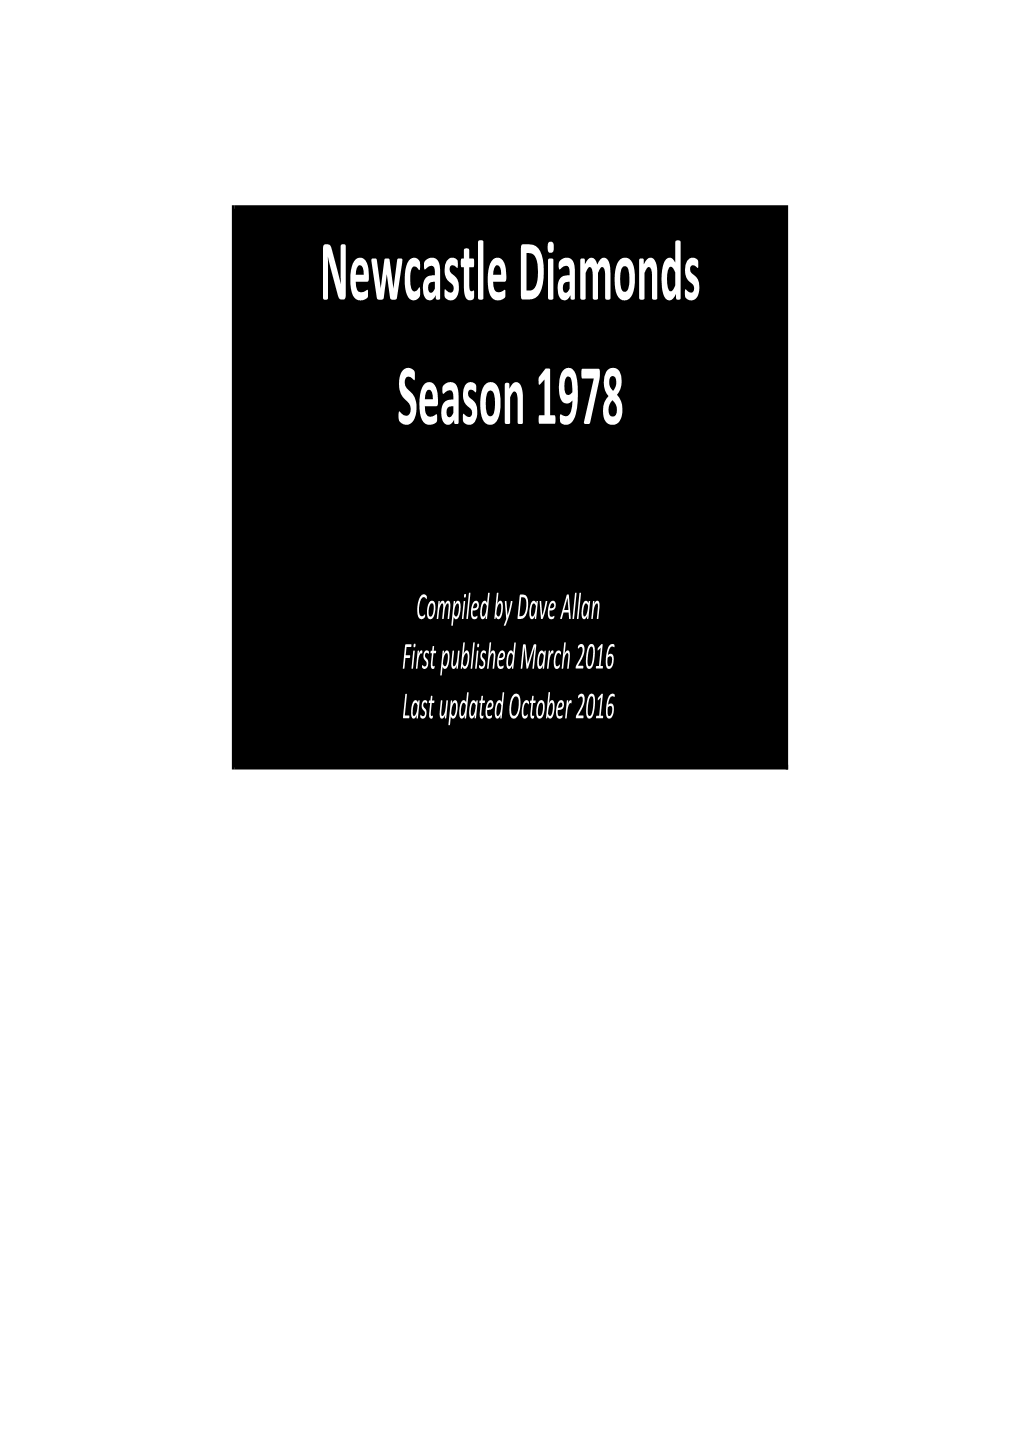 Newcastle Diamonds Season 1978